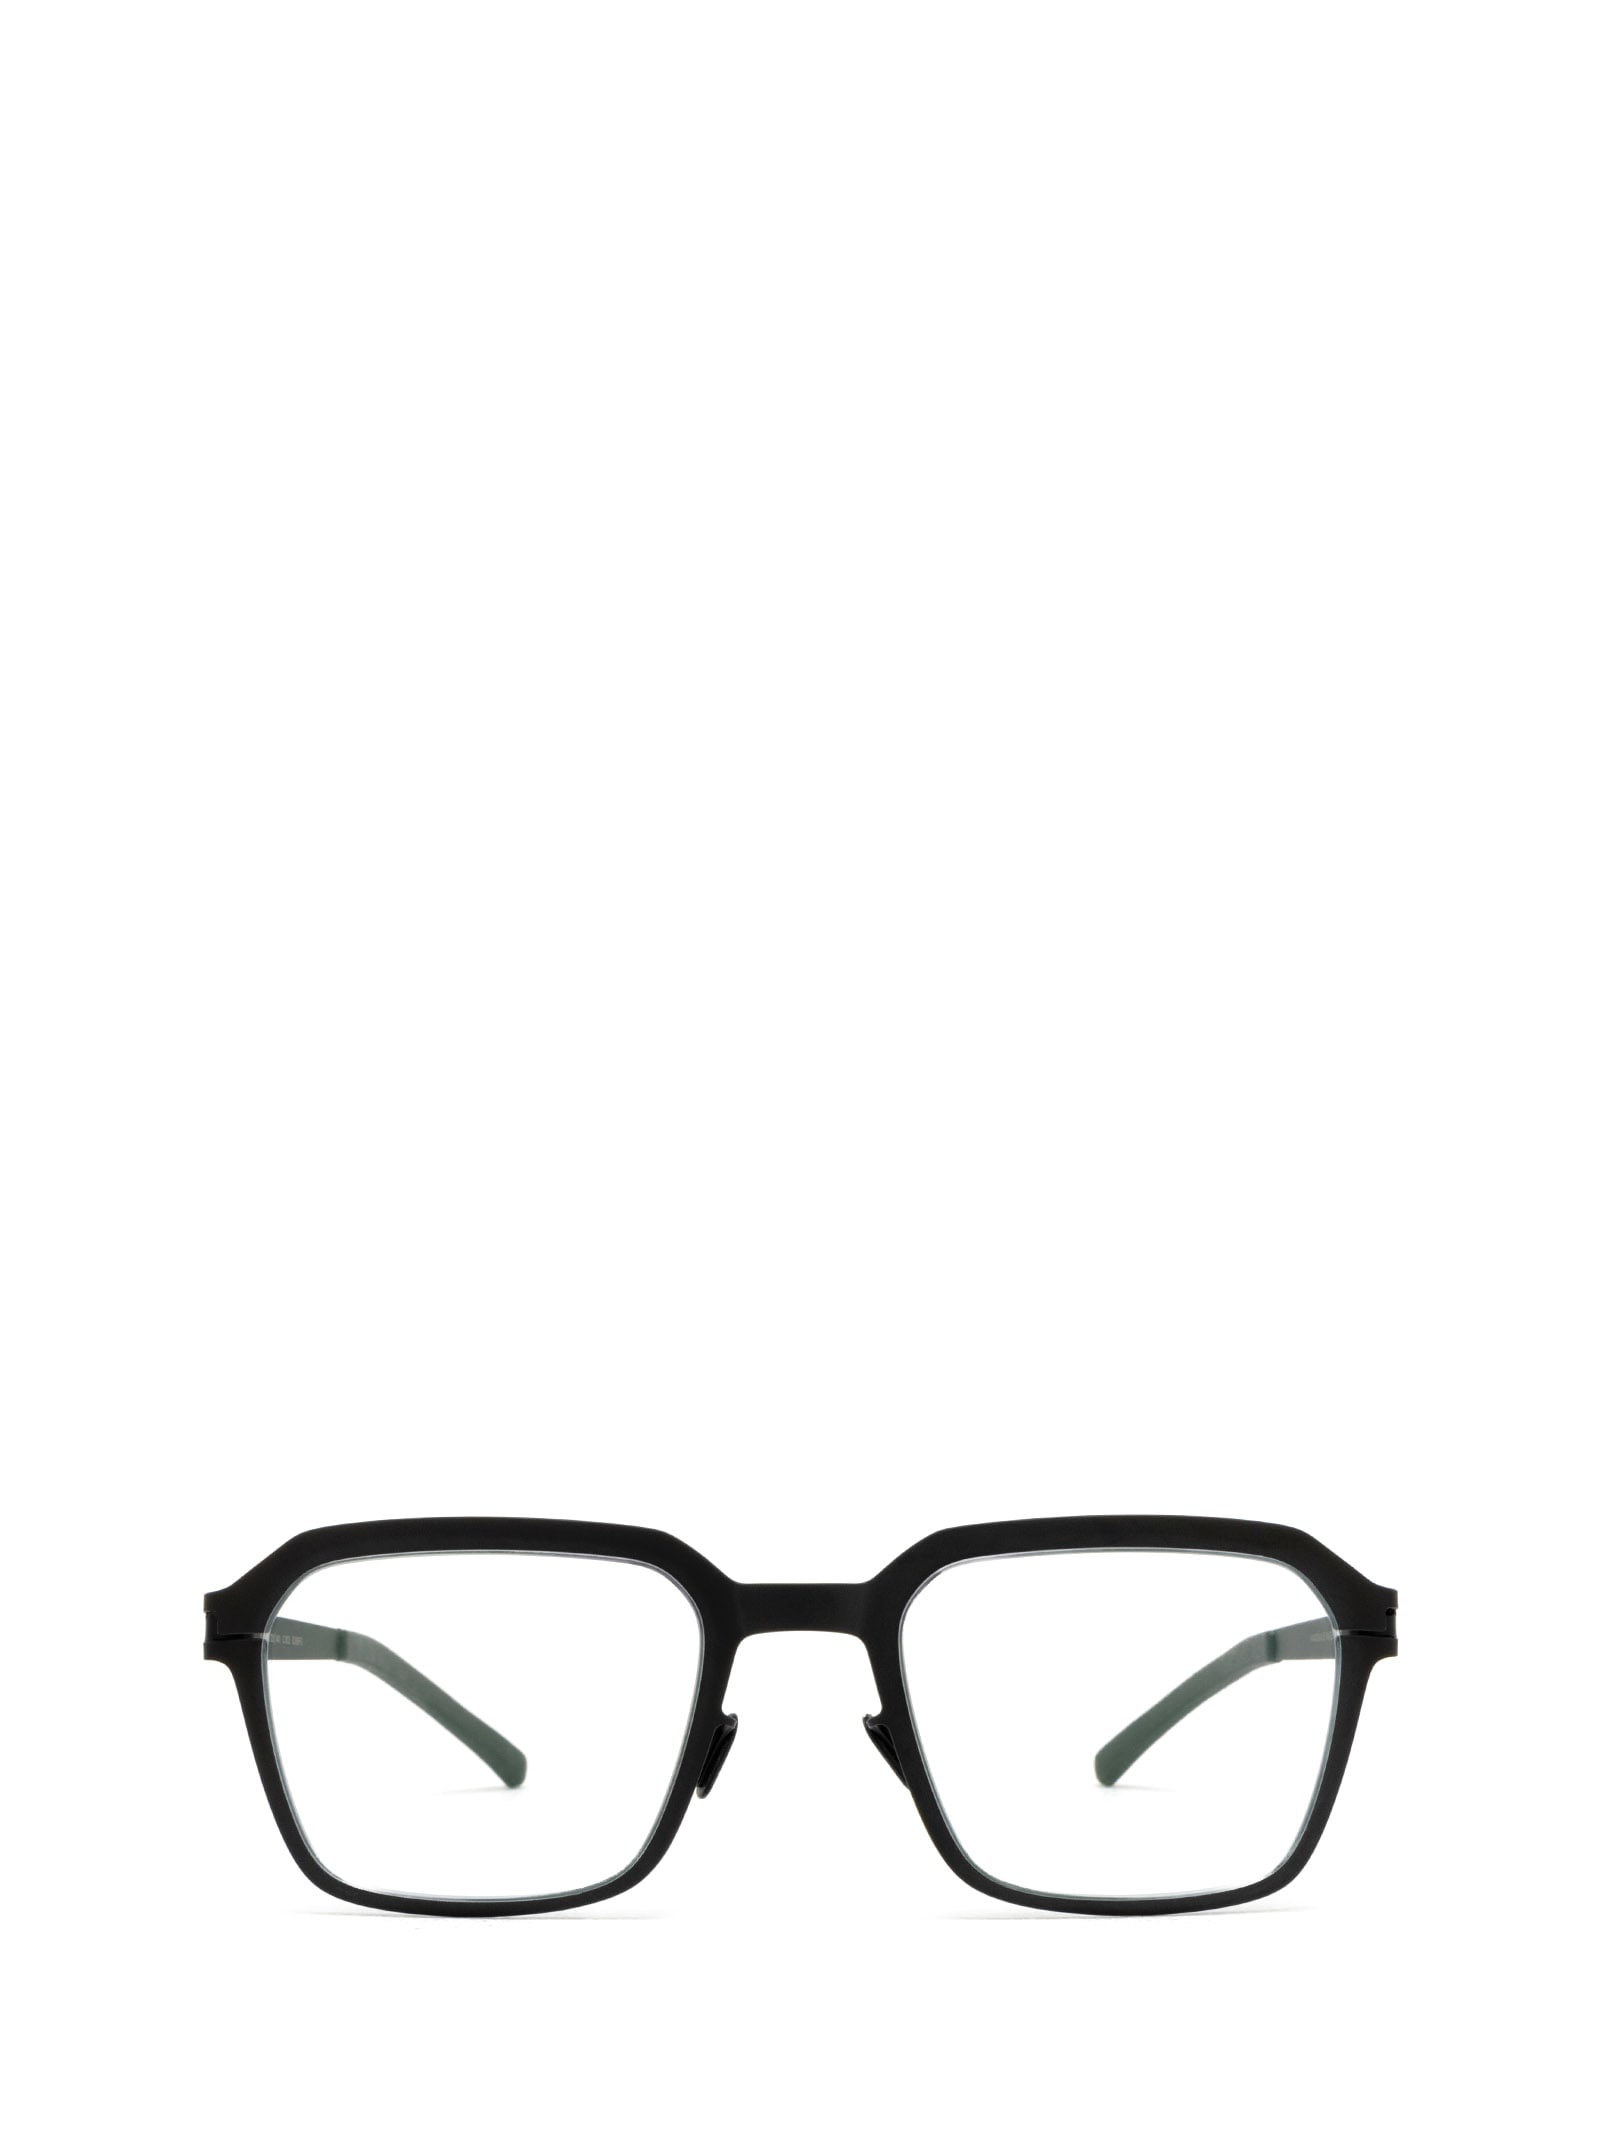 Garland Black Glasses